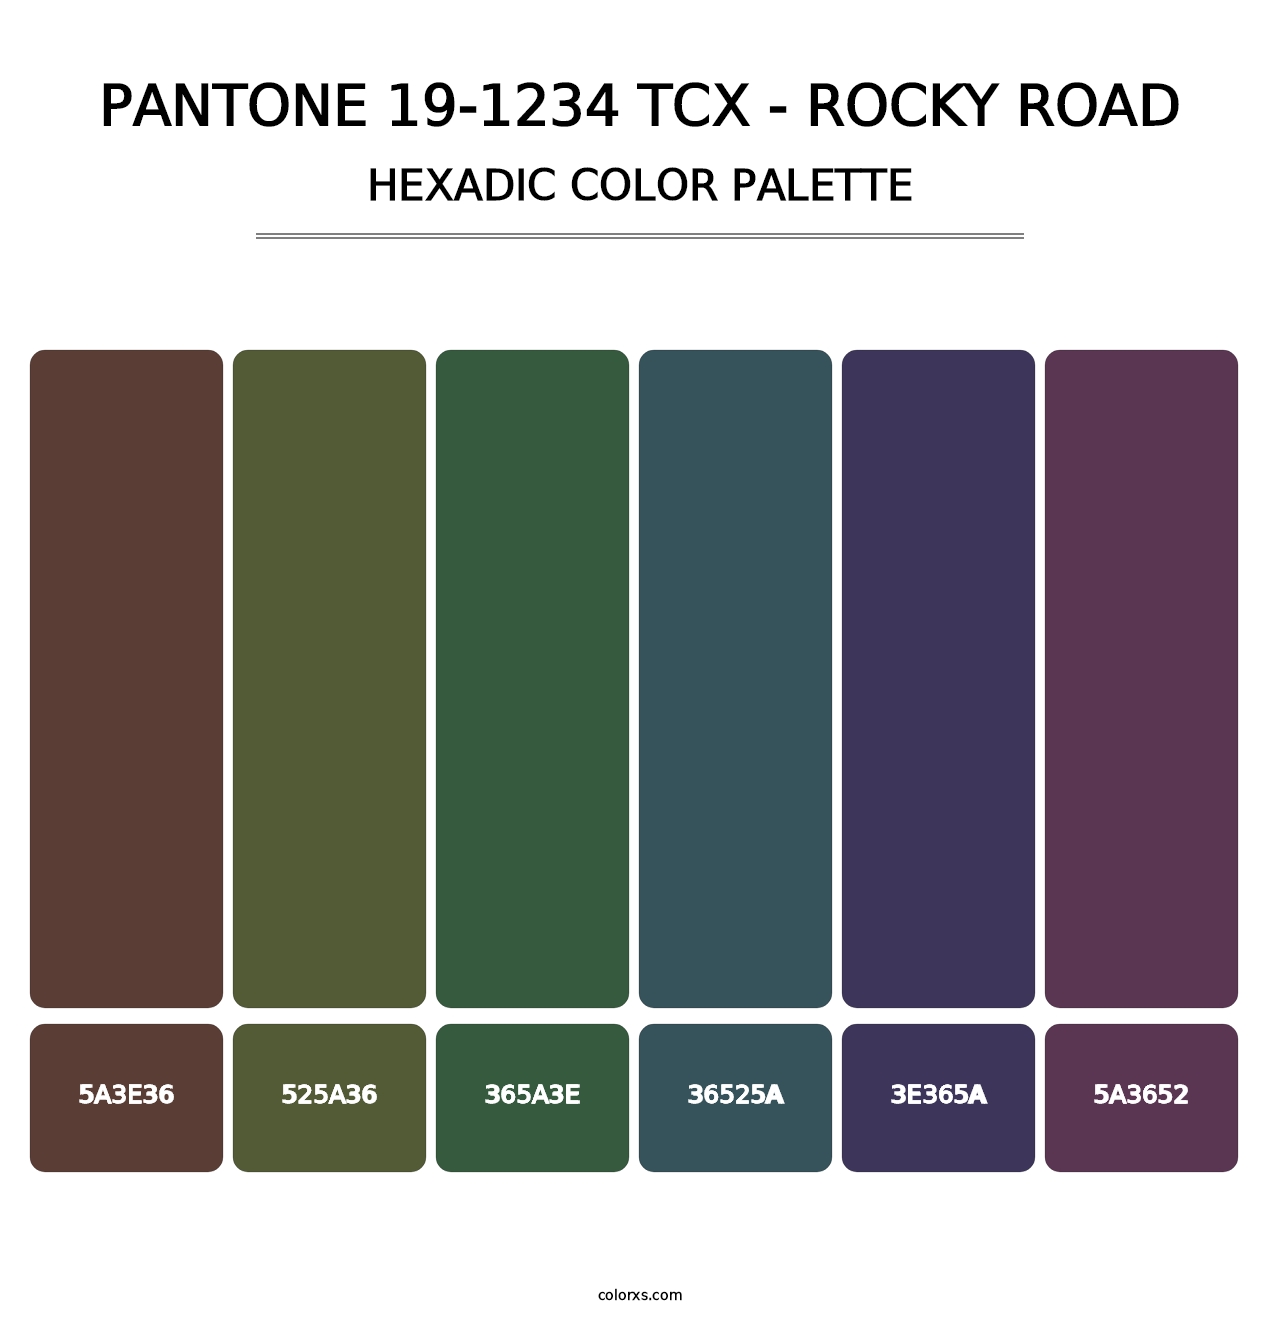 PANTONE 19-1234 TCX - Rocky Road - Hexadic Color Palette